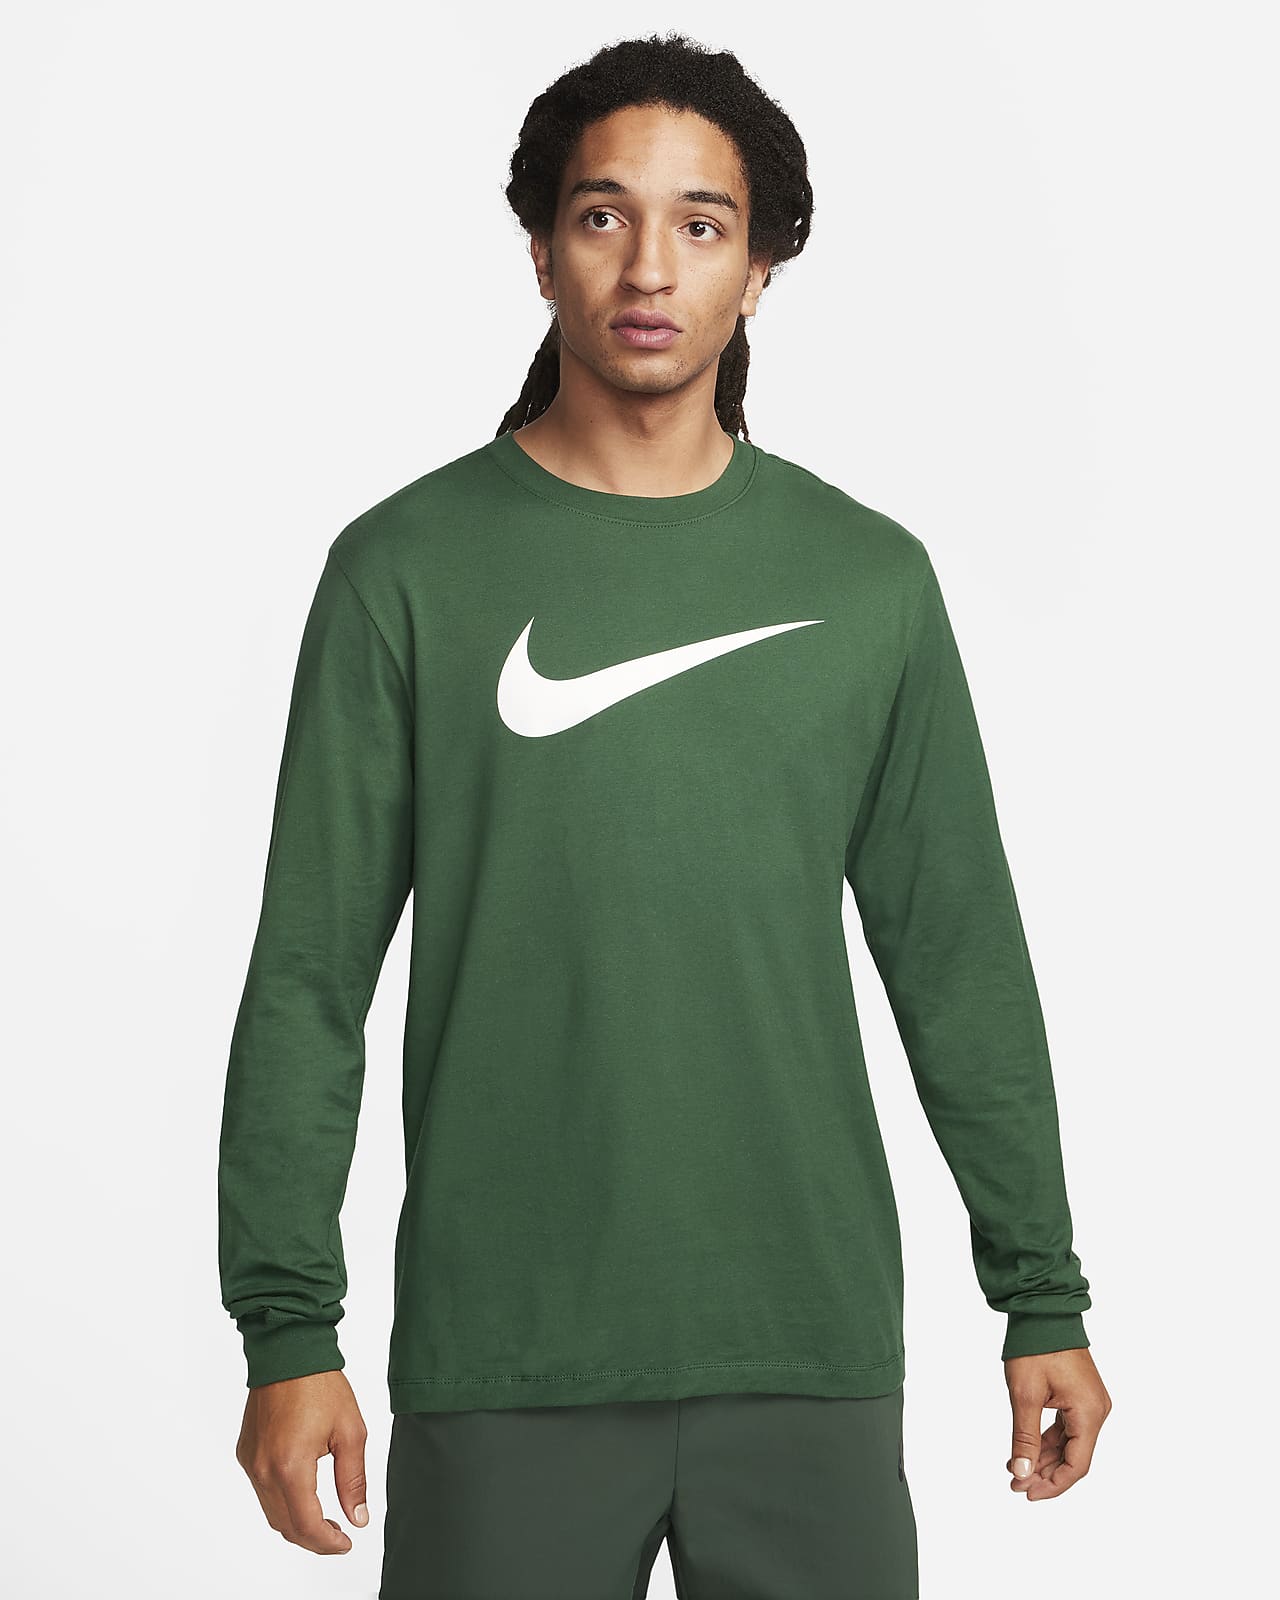 Boys' 4-7 Nike Long Sleeve Baseball Graphic T-Shirt